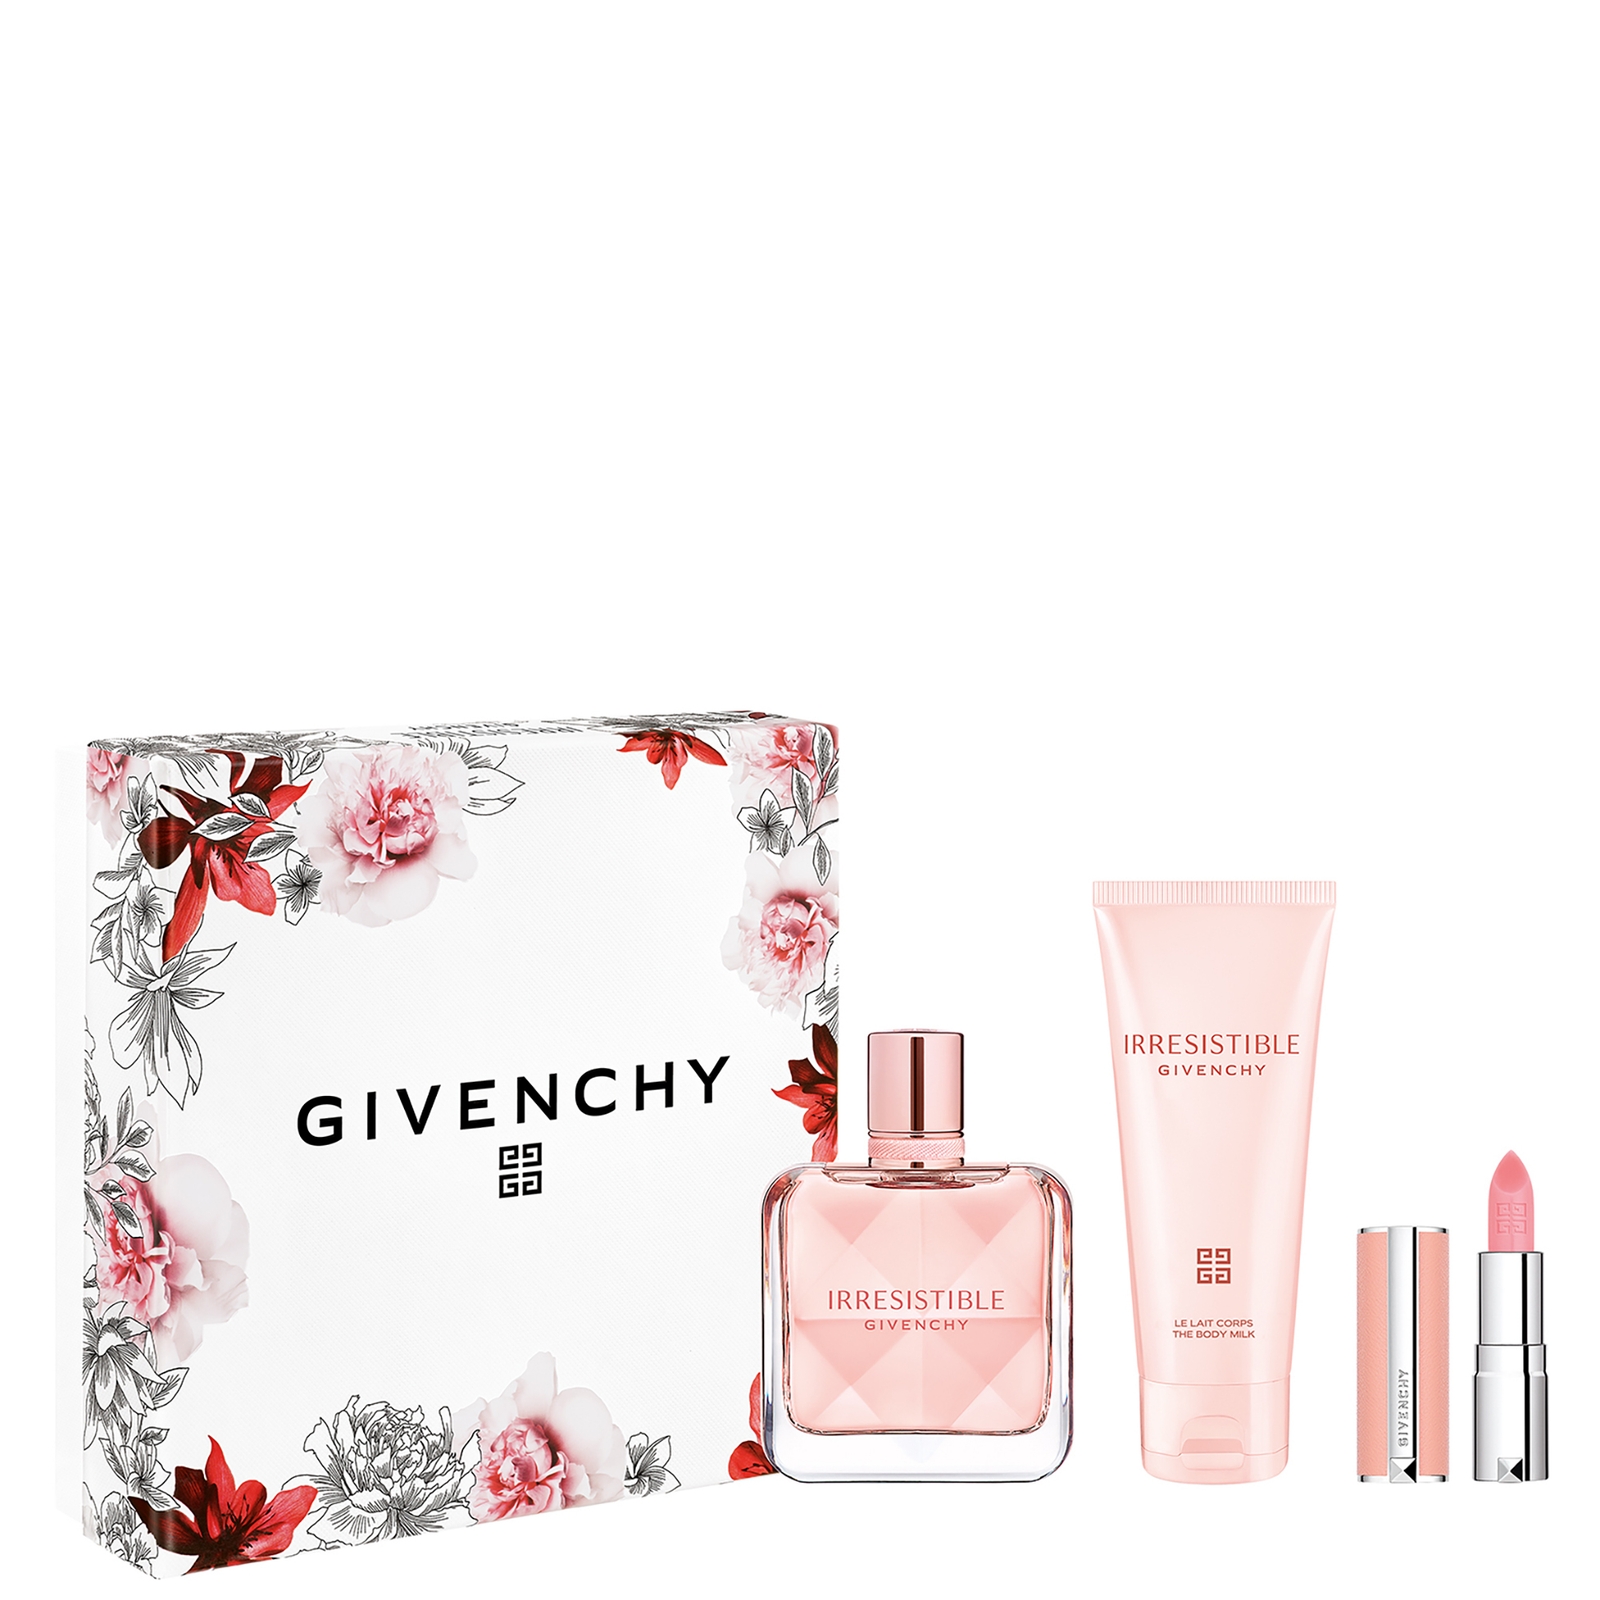 Photos - Women's Fragrance Givenchy Irresistible Eau de Parfum 50ml and Rose Perfecto Gift Set P10014 